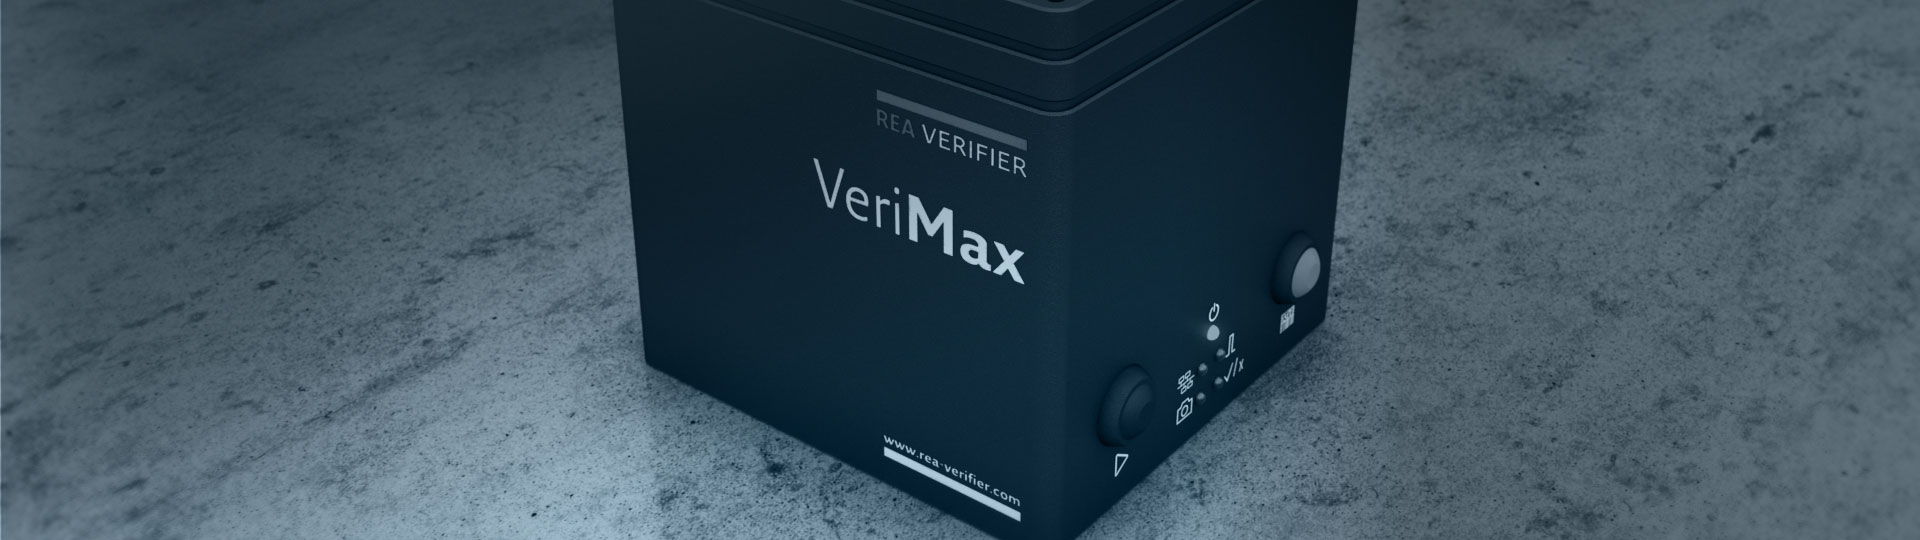 REA VERIFIER - Verimax